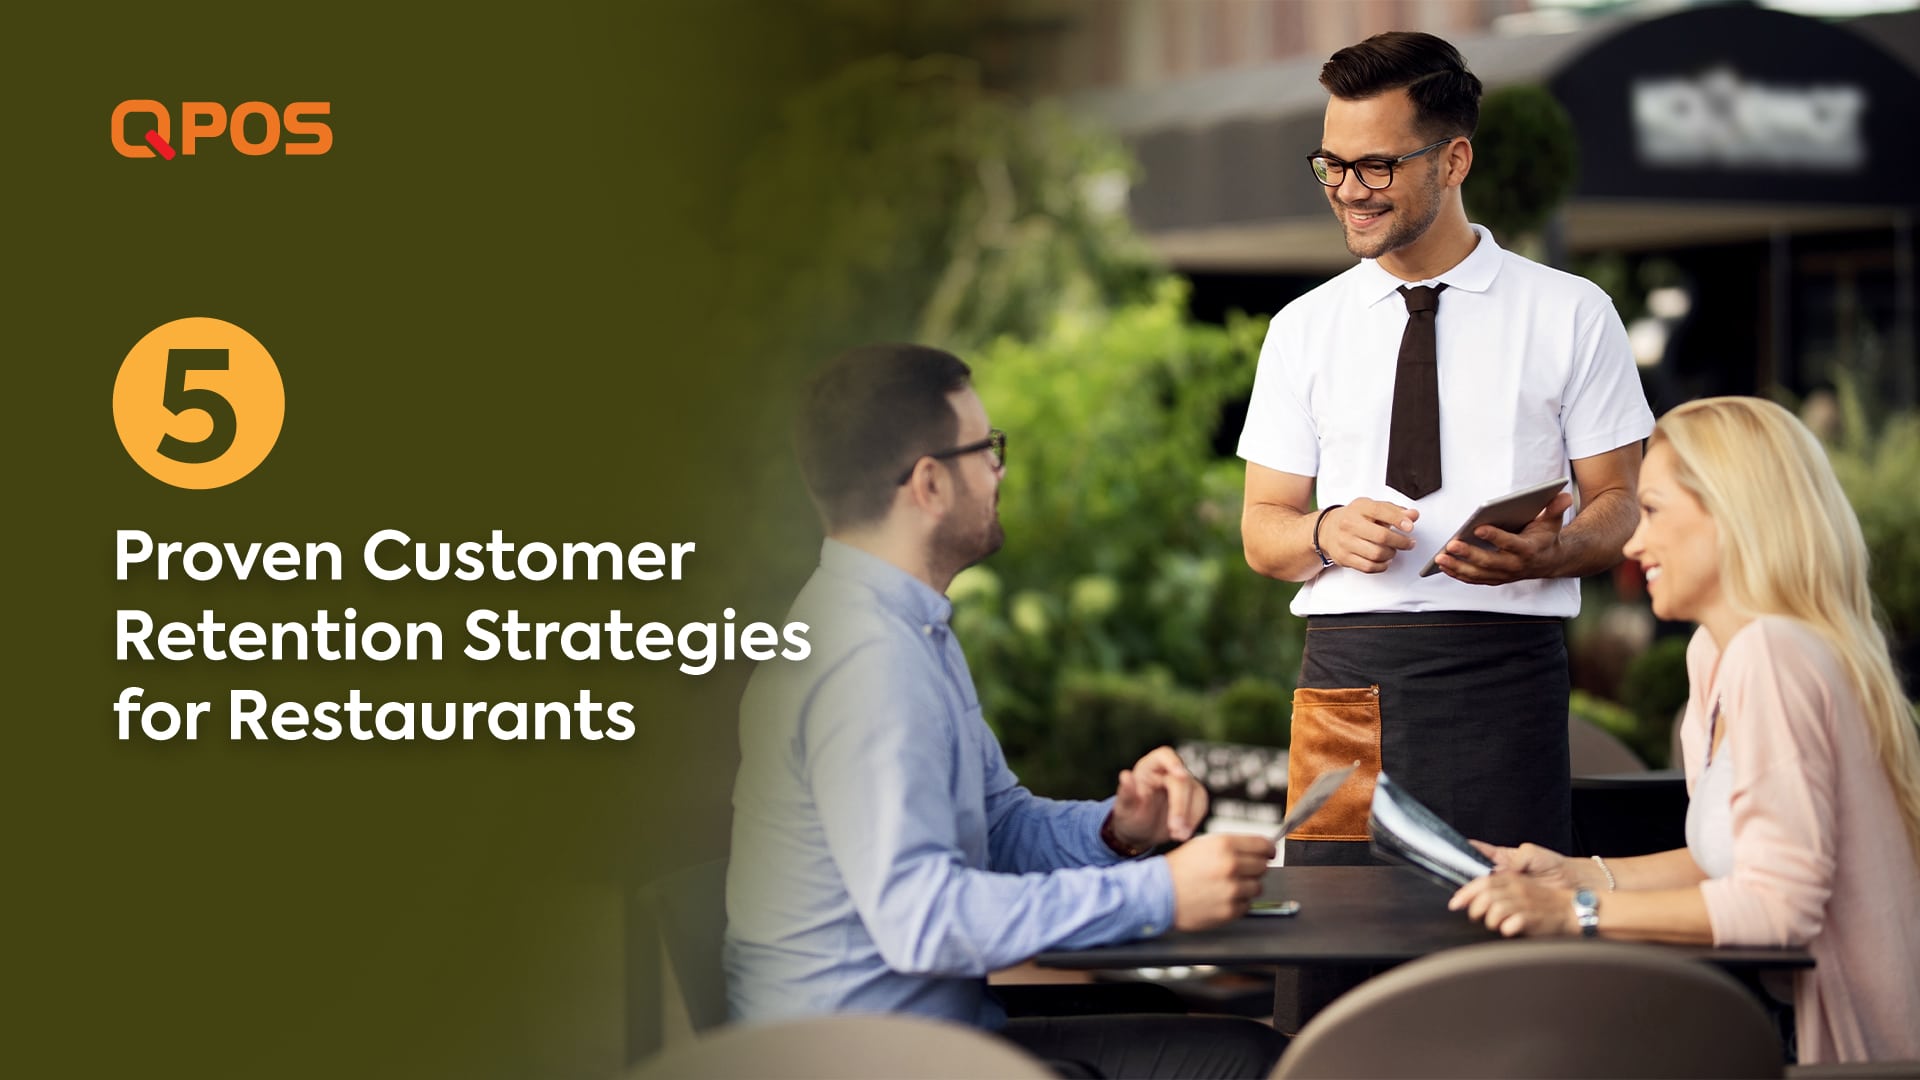 5 Proven Customer Retention Strategies for Restaurants